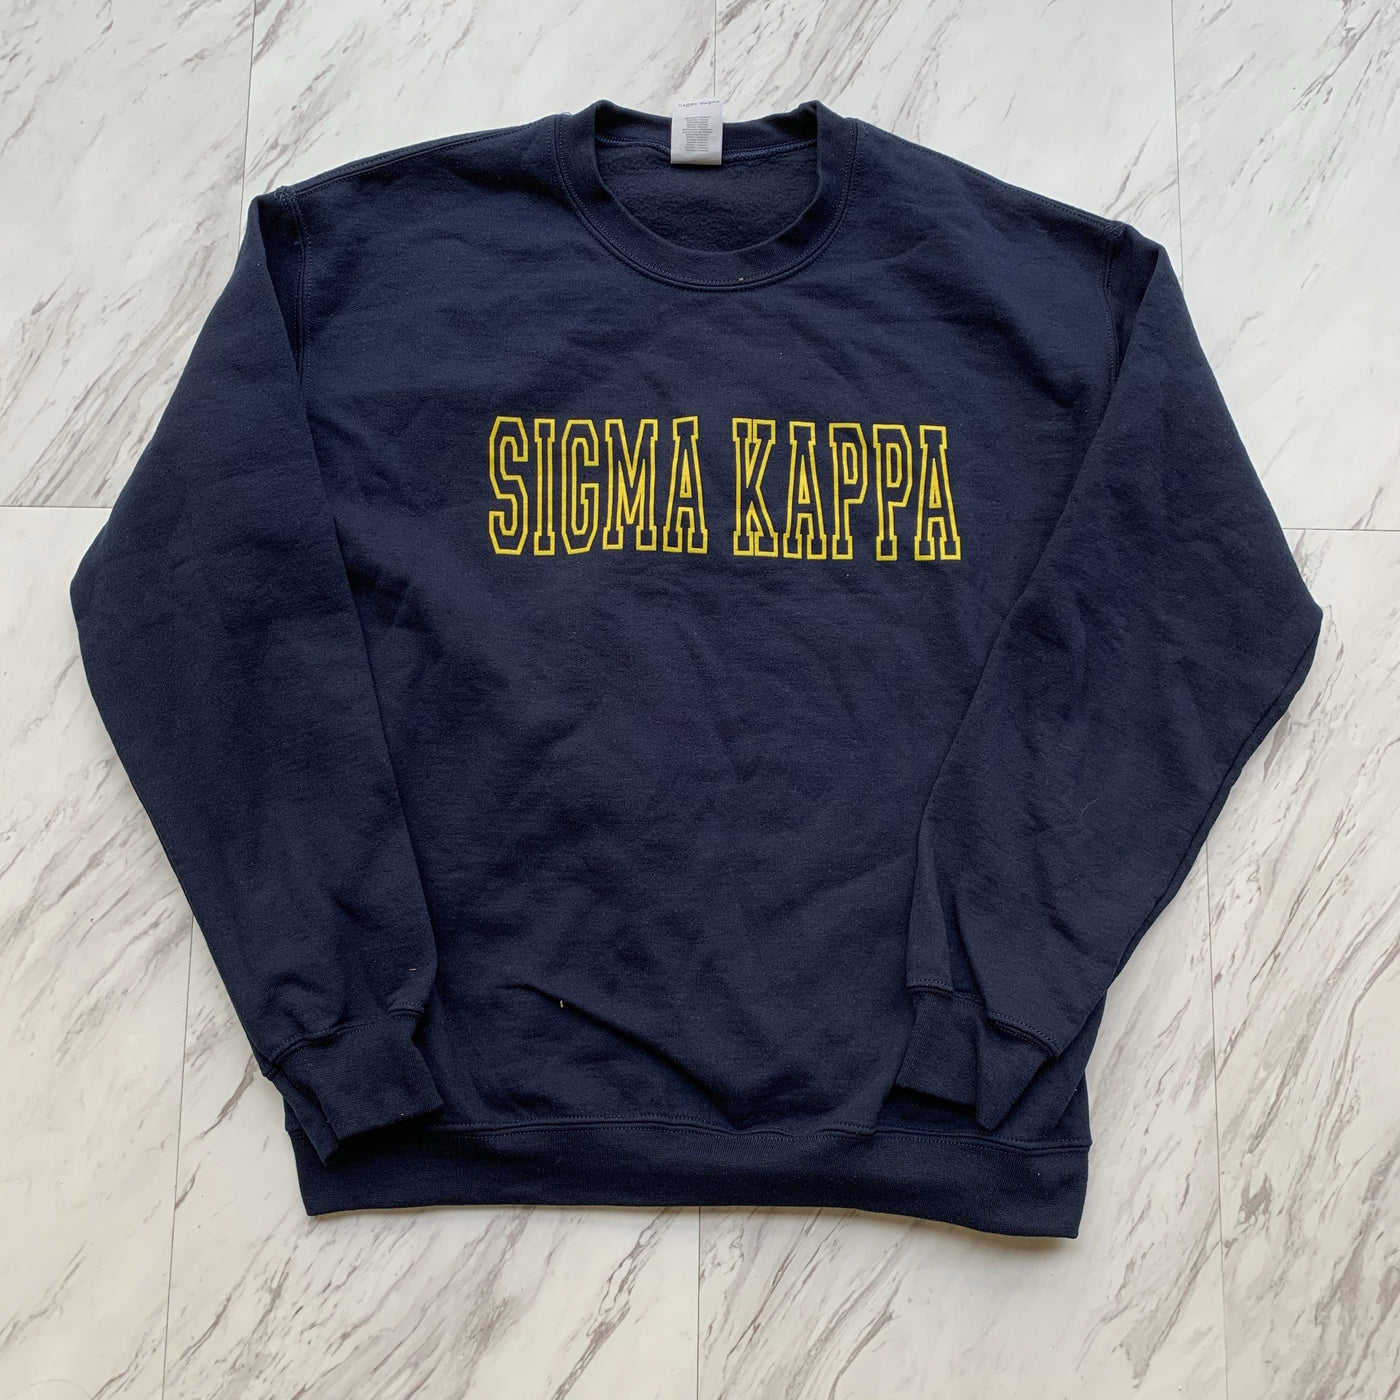 Sigma Kappa navy sweater